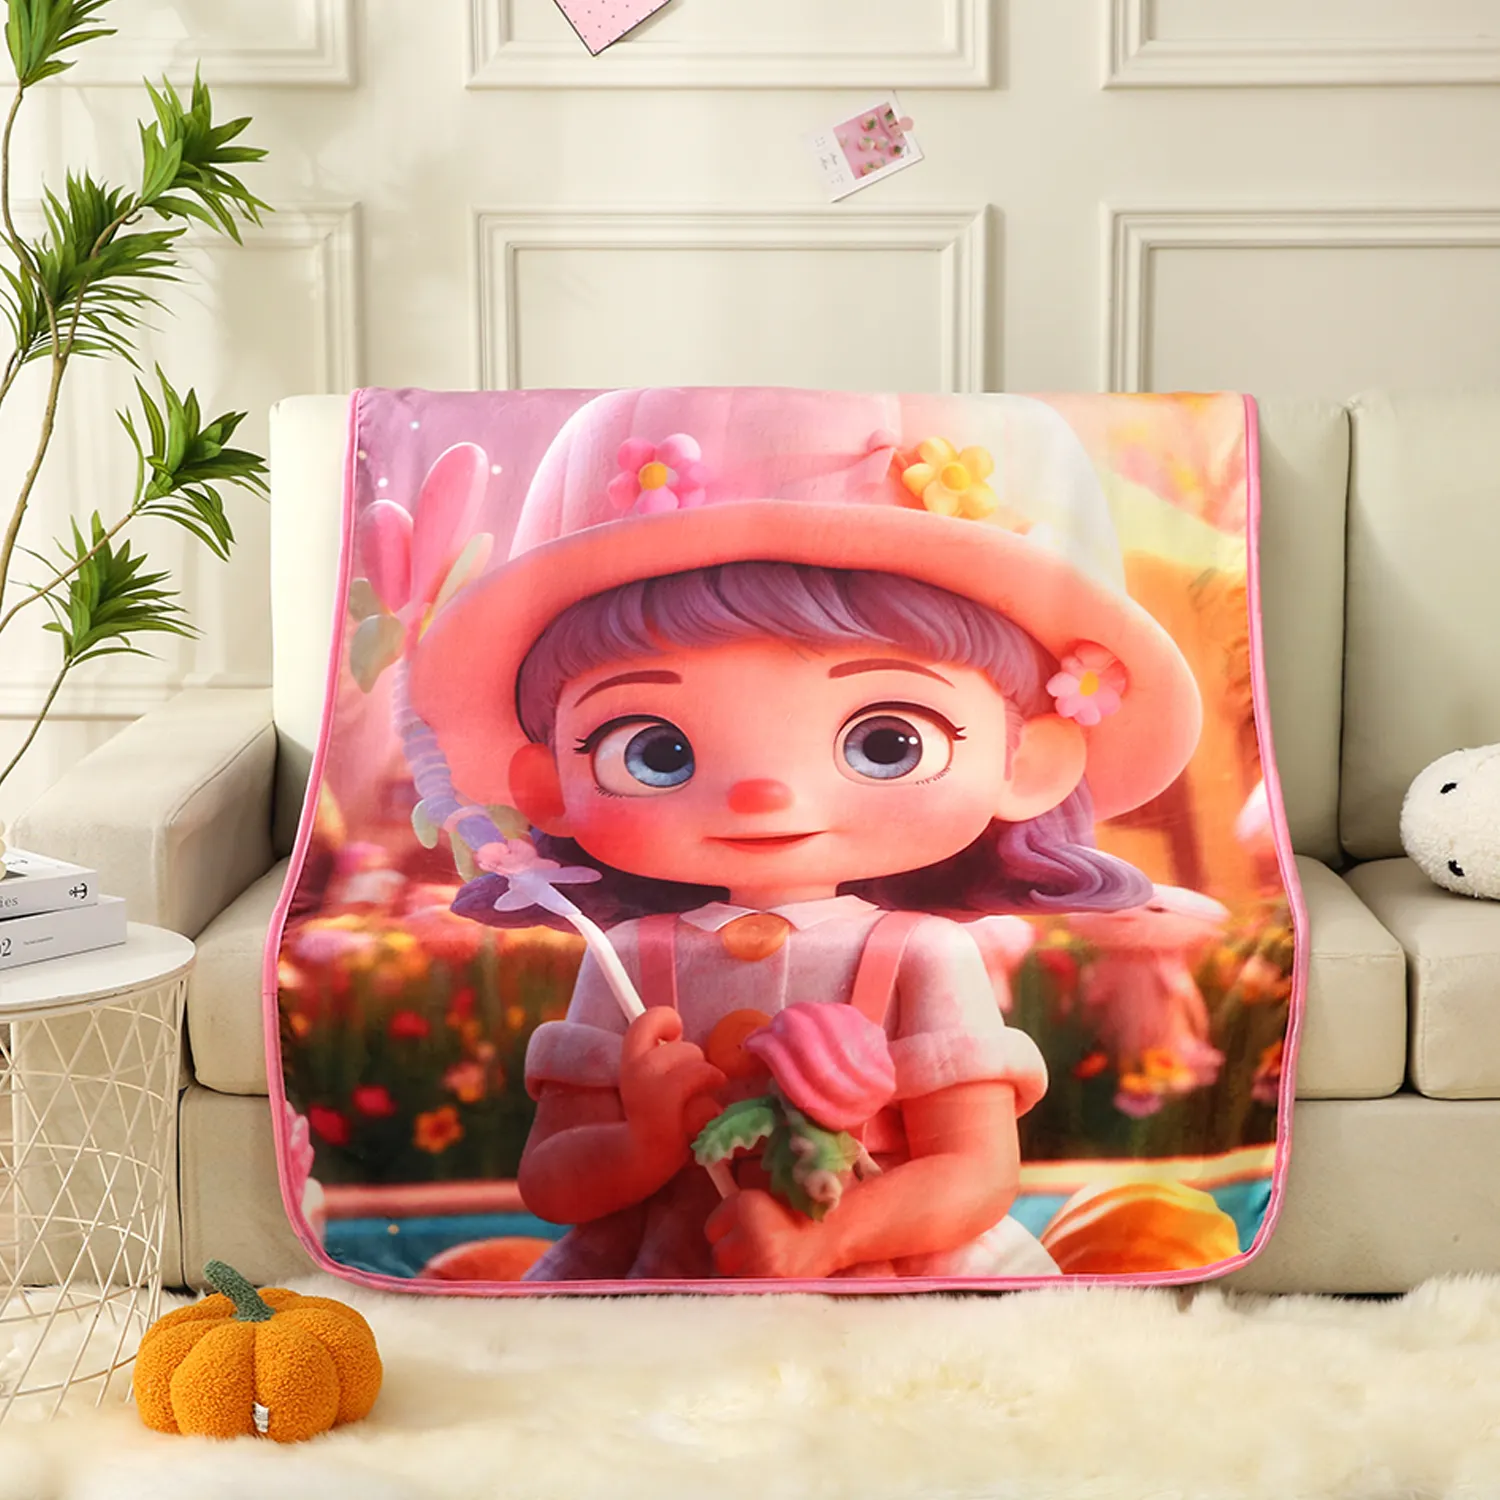 2 Ply Super Soft Fleece Baby Blanket 3D Printed Designs-Animal Cartoon Floral Character   Joyous Patterns Newborn Toddler Kids